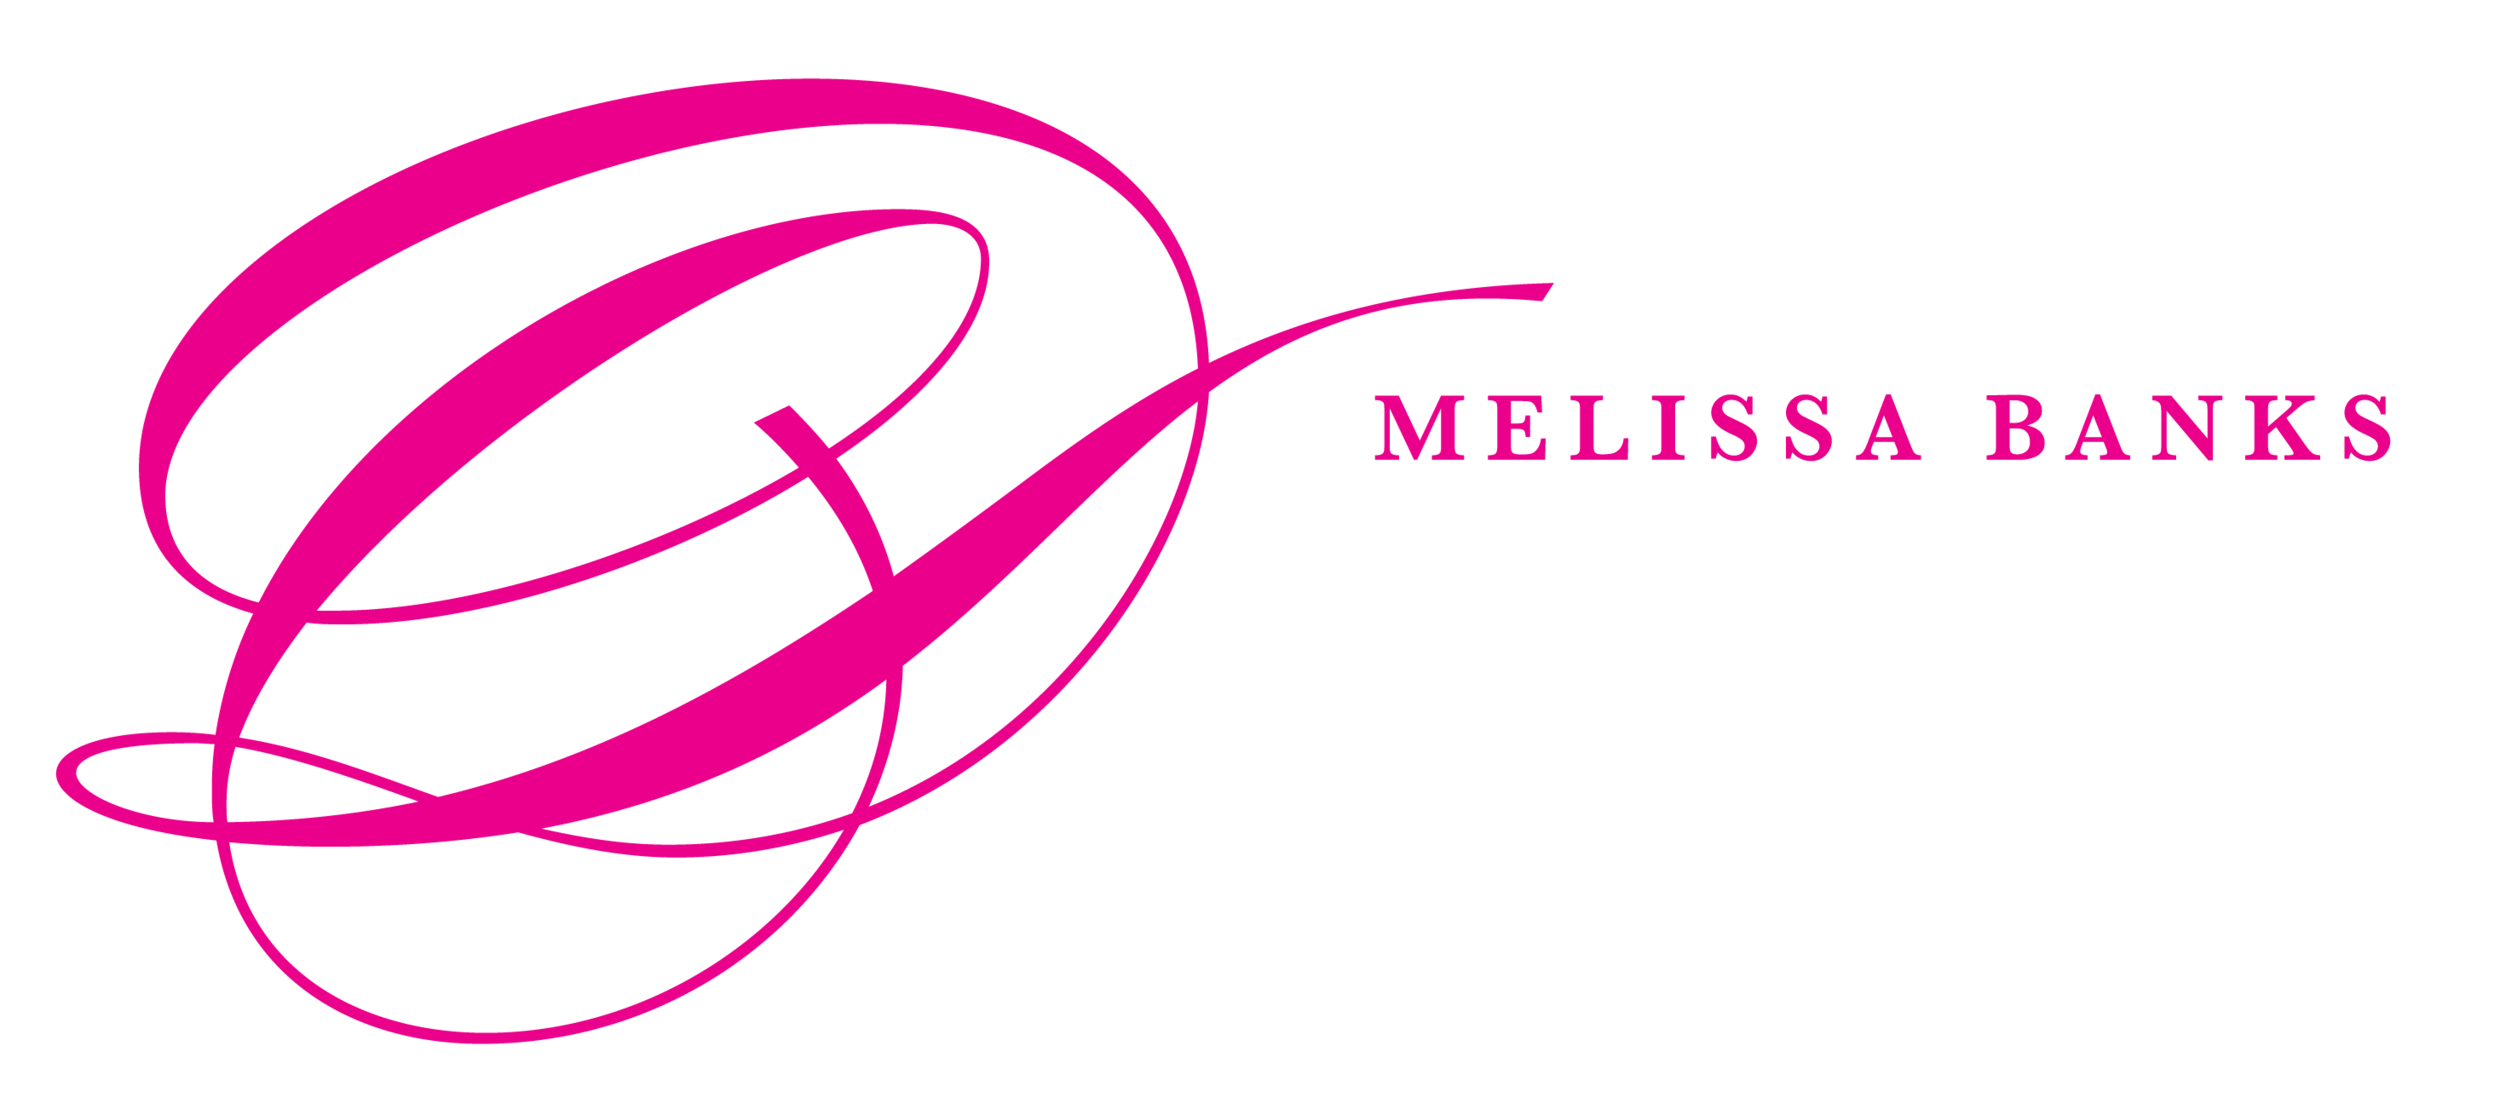 Dream, A Jewelry Boutique